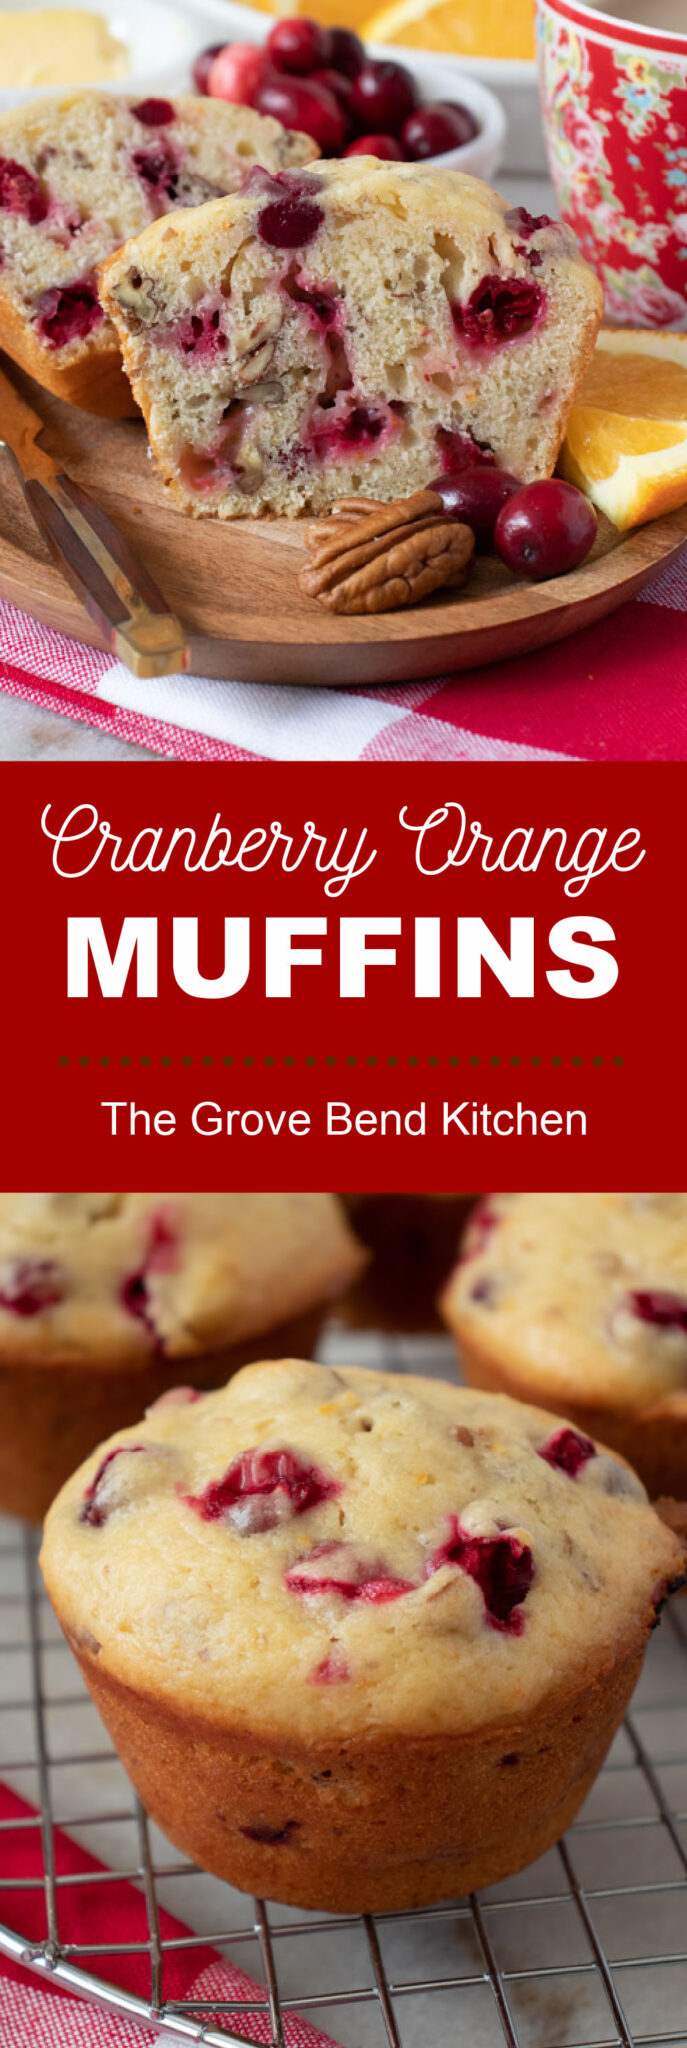 Cranberry Orange Muffins - The Grove Bend Kitchen